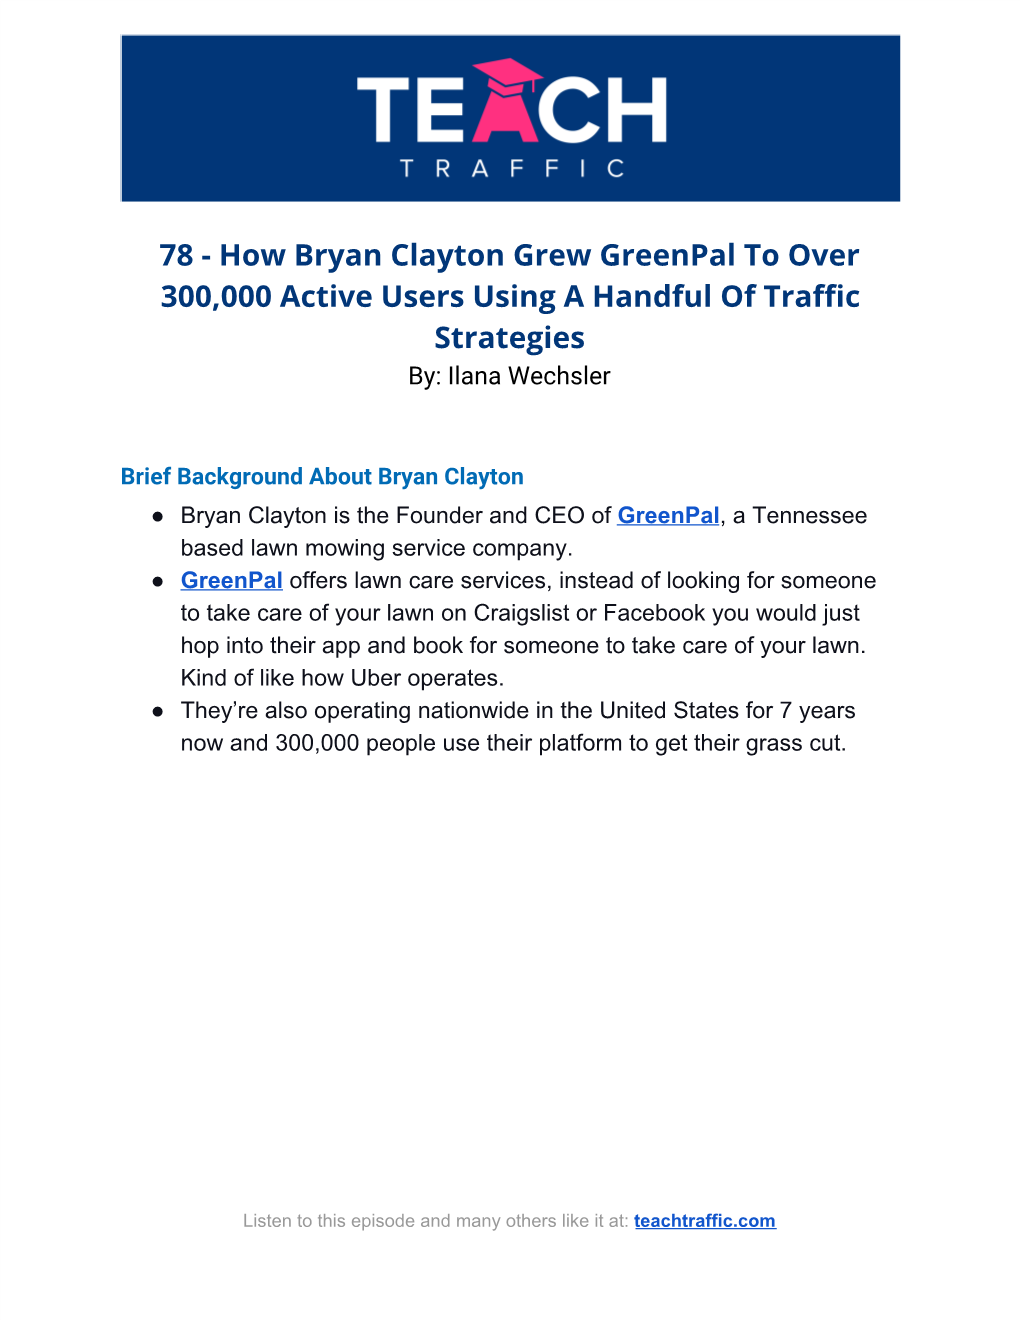 How Bryan Clayton Grew Greenpal to Over 300000